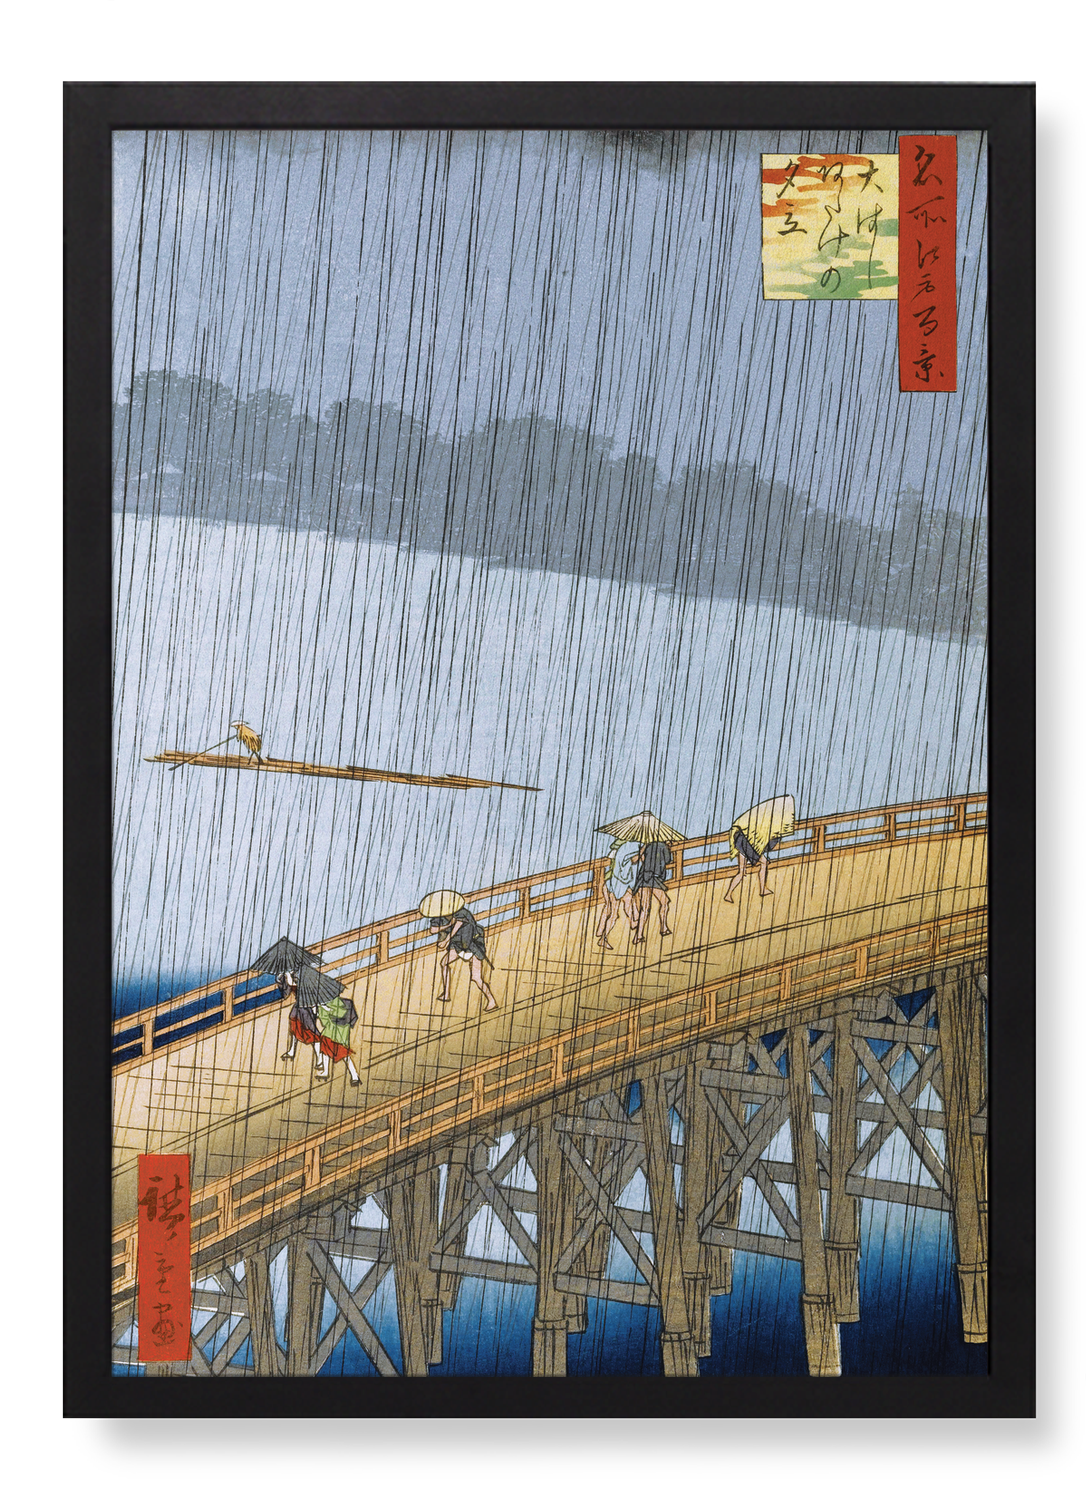 SUDDEN SHOWER AT OHASHI BRIDGE AND ATAKE (1857)